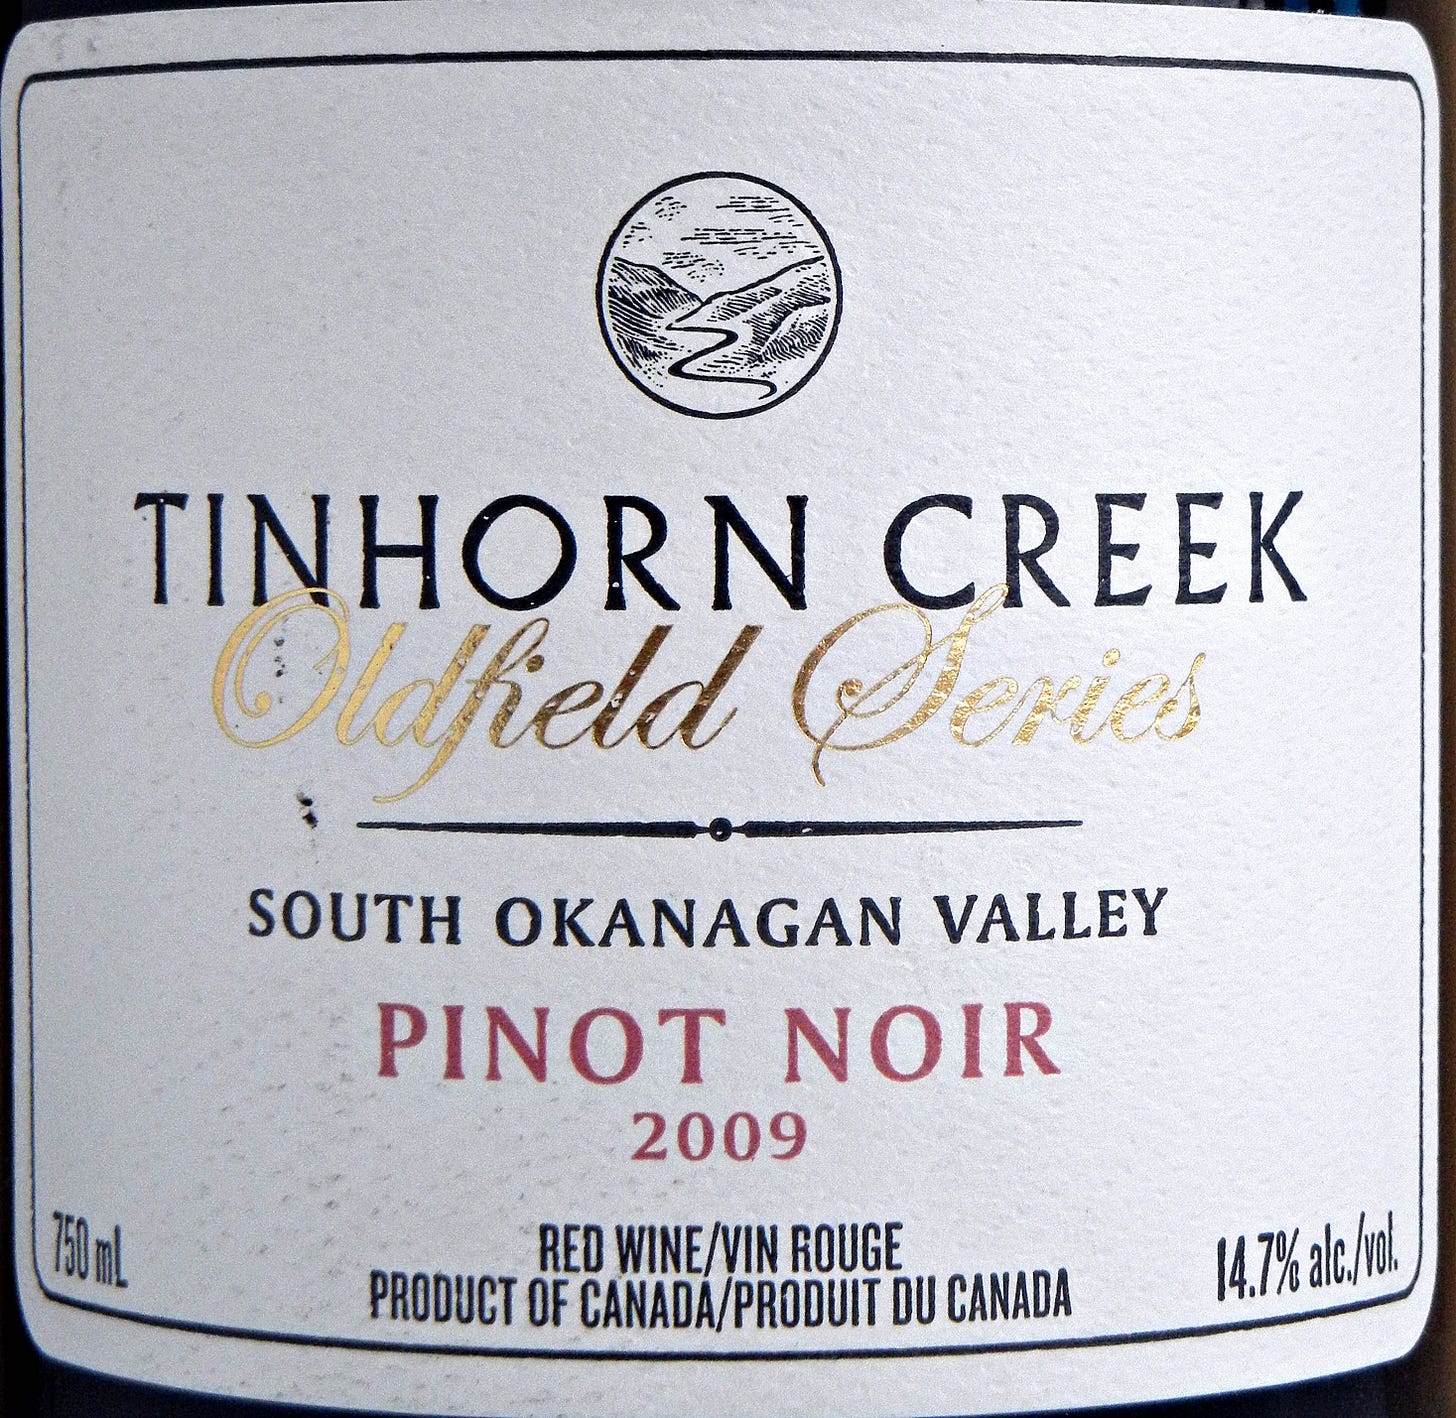 Tinhorn Creek Oldfield Series Pinot Noir 2009 Label - BC Pinot Noir Tasting Review 26